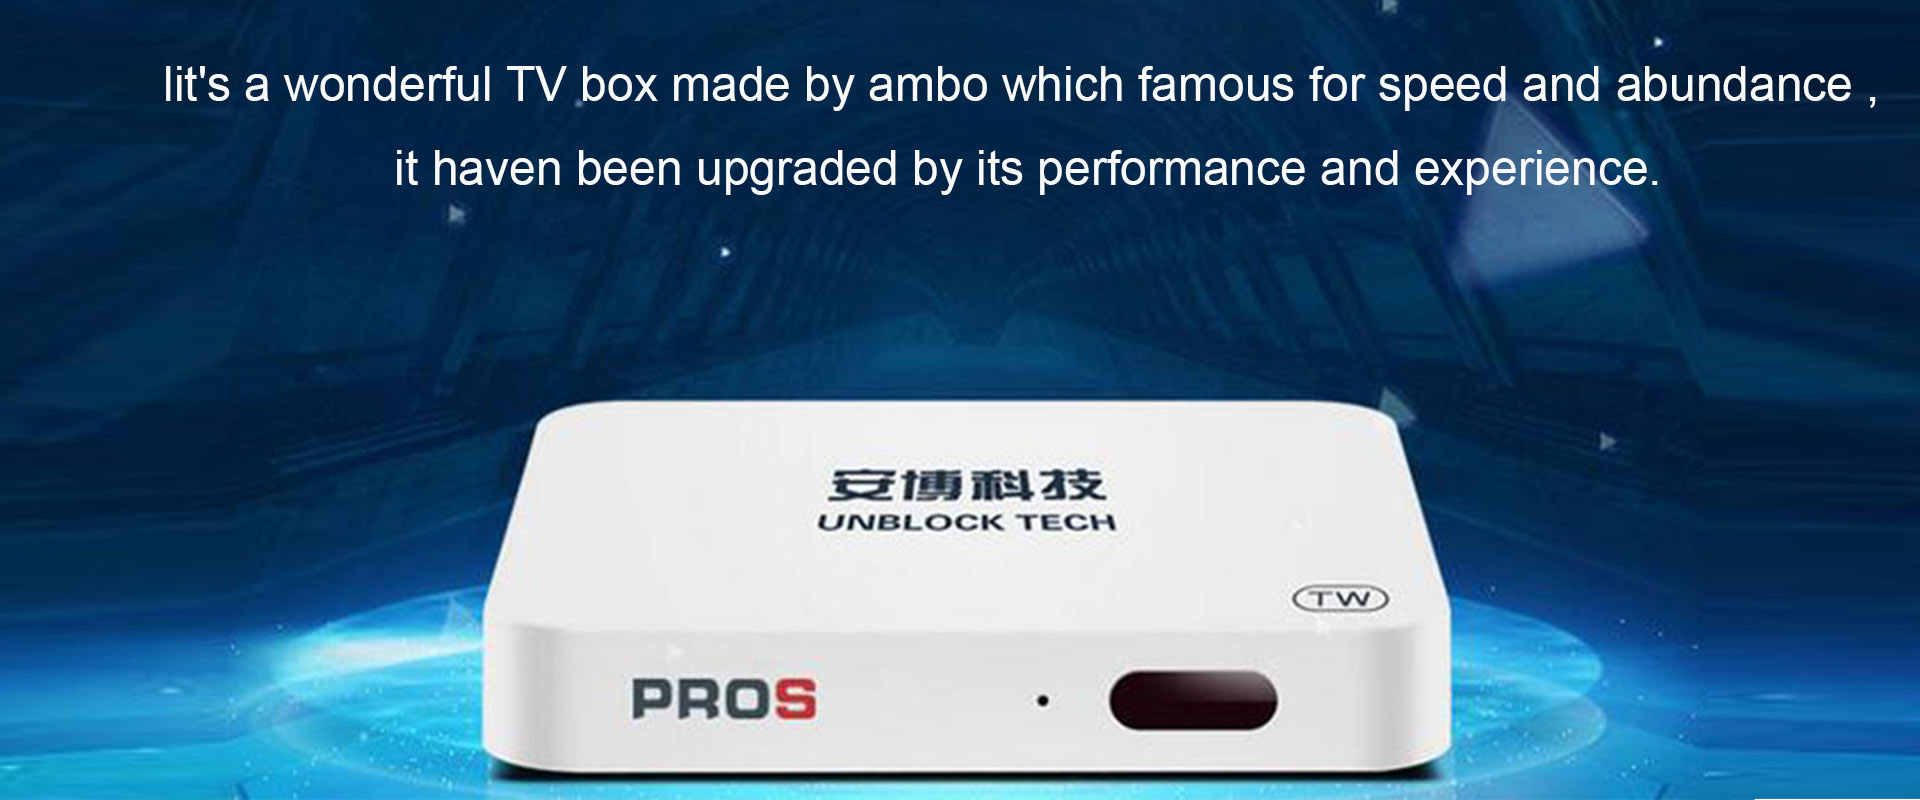 UBOX 7 TV Box - إلغاء حظر UPROS UBOX Gen 7 Android TV Box 4K